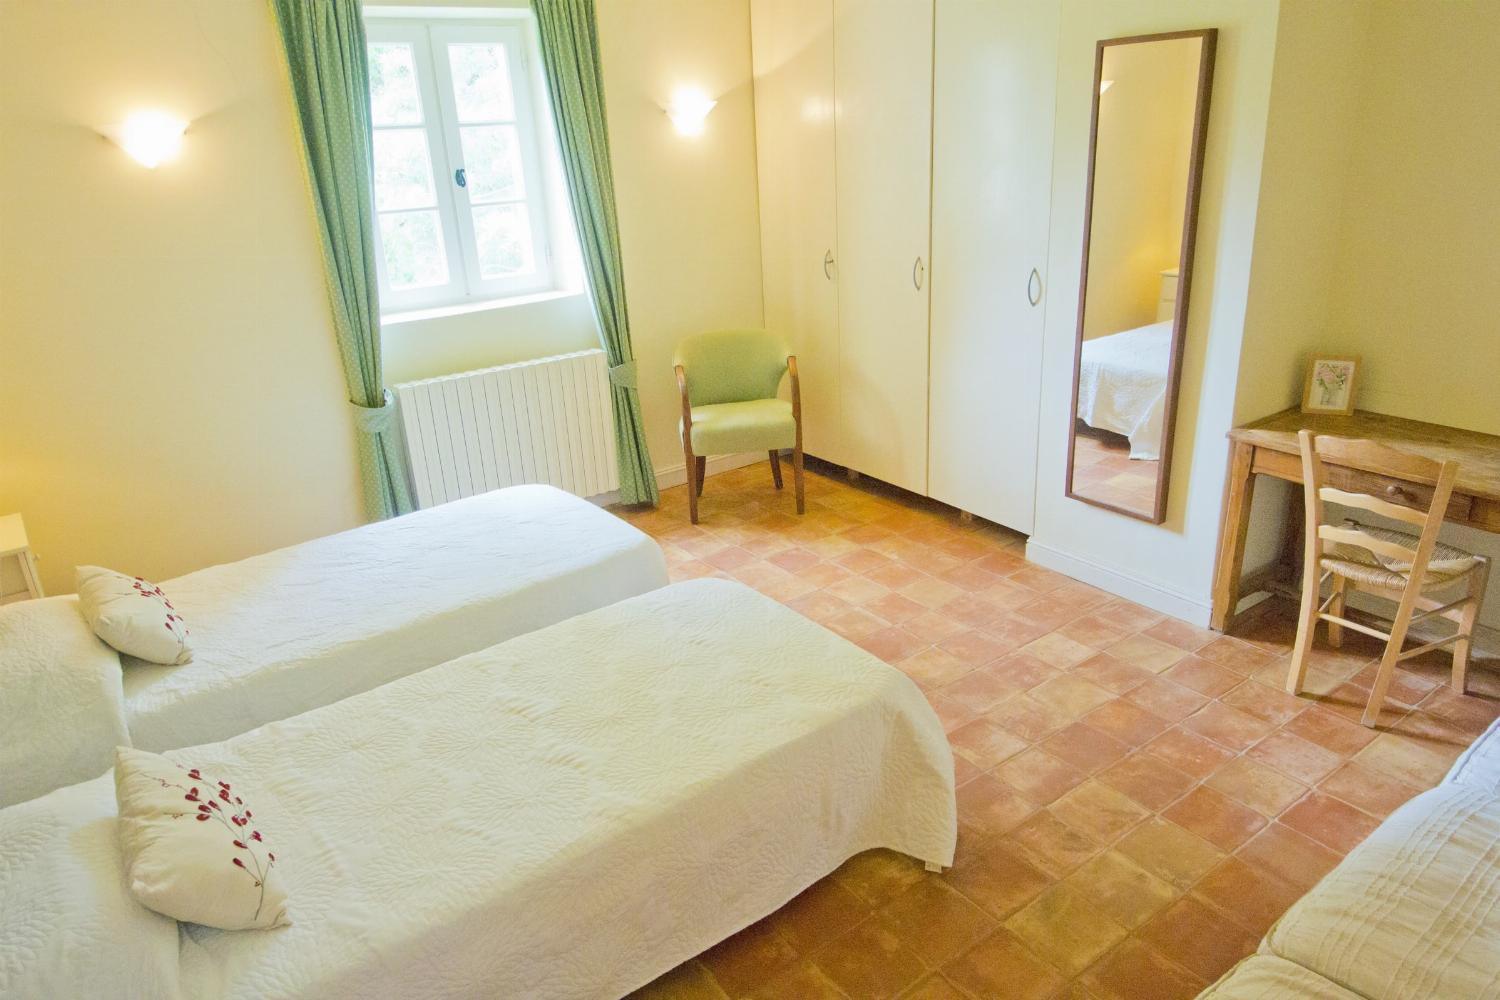 Bedroom | Rental home in Provence